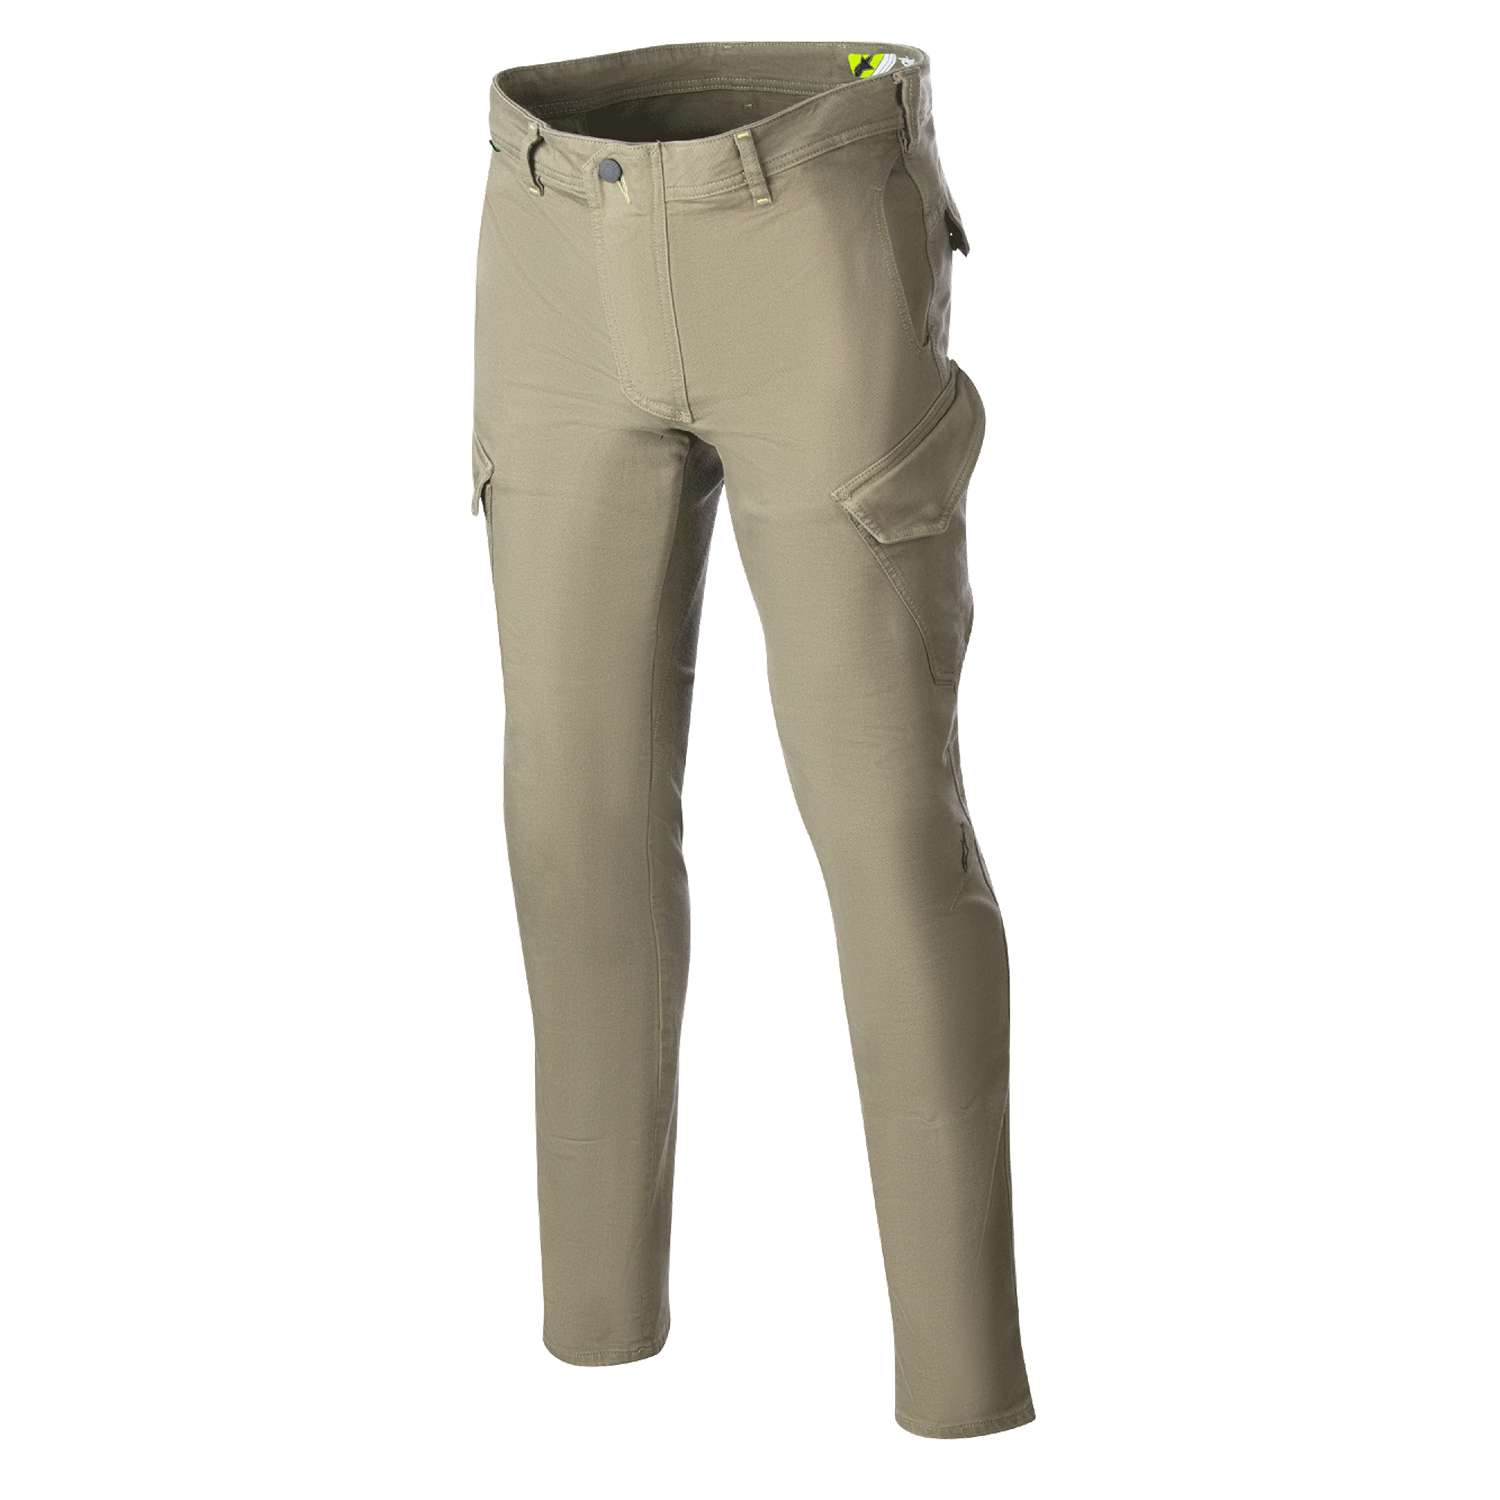 Image of Alpinestars Caliber Slim Fit Tech Riding Pants Military Green Size 31 ID 8059347165226